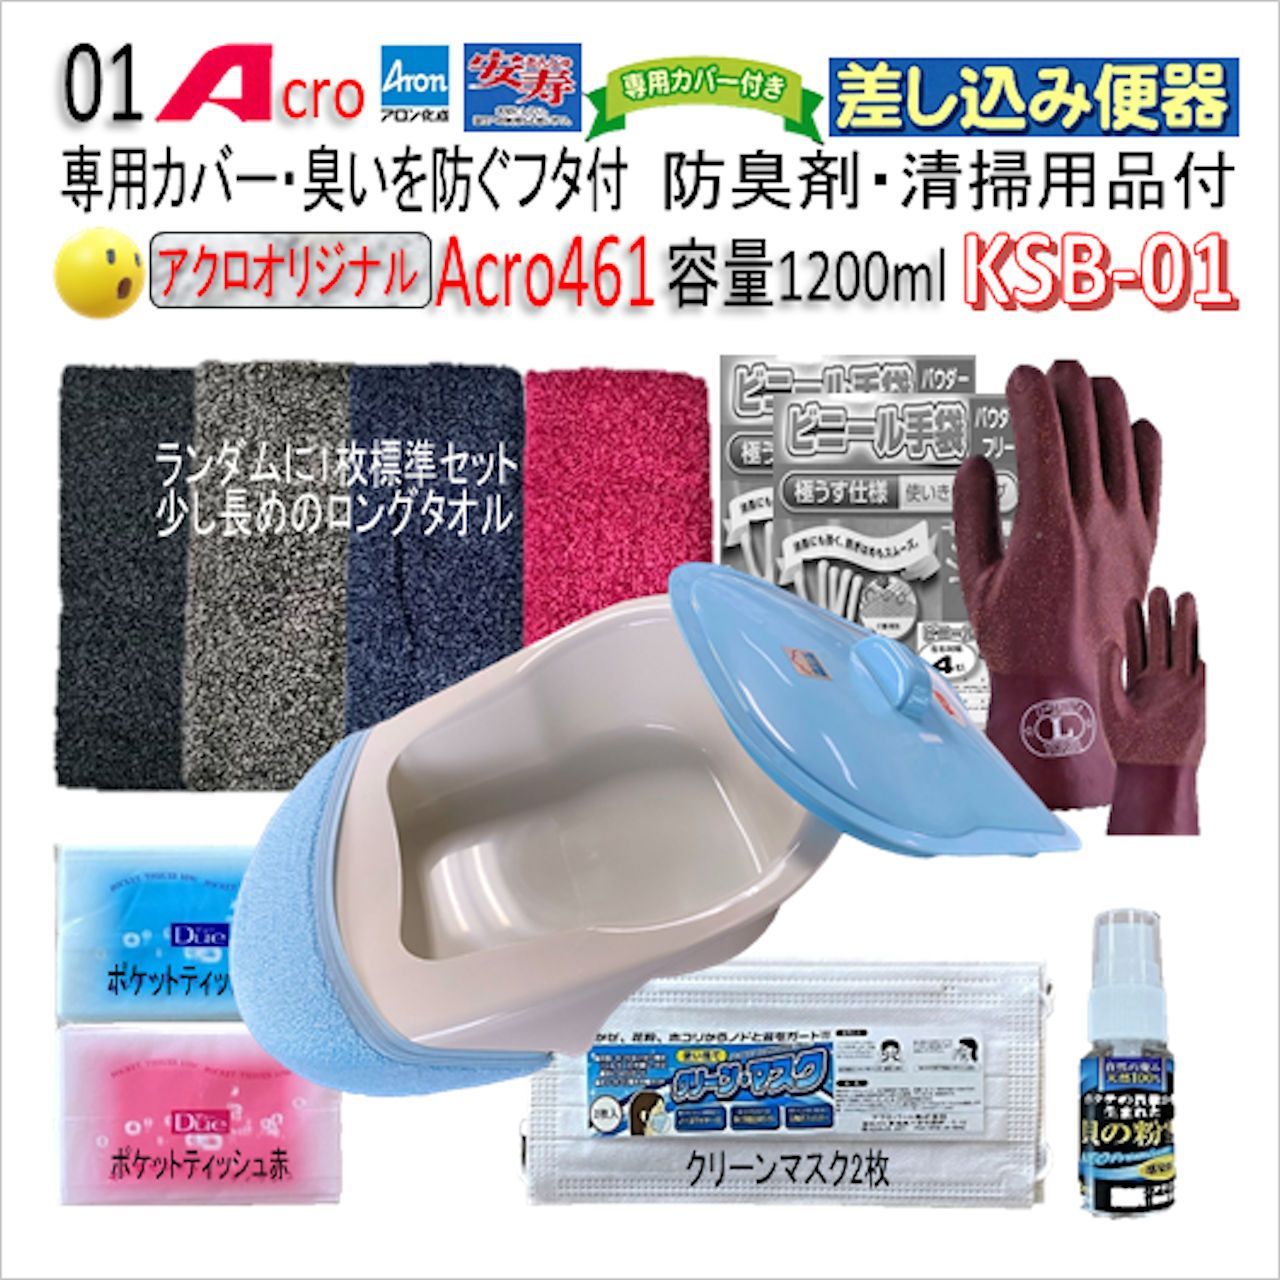 Acro461アロン差し込み便器専用カバー付&防臭剤・お手入れセット付KSB